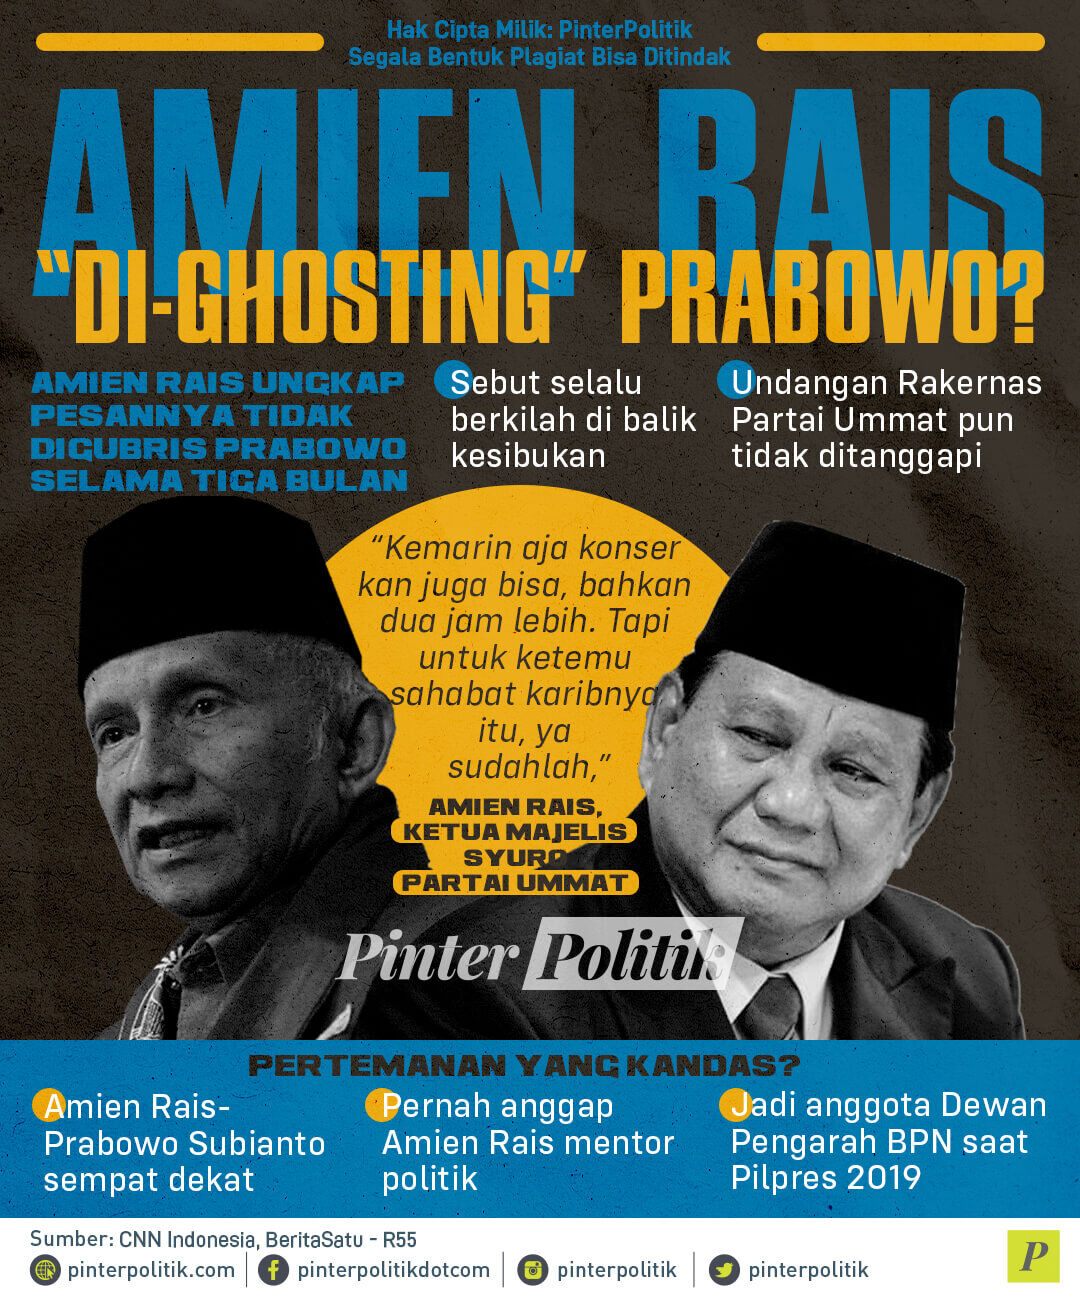 infografis amien rais di ghosting prabowo